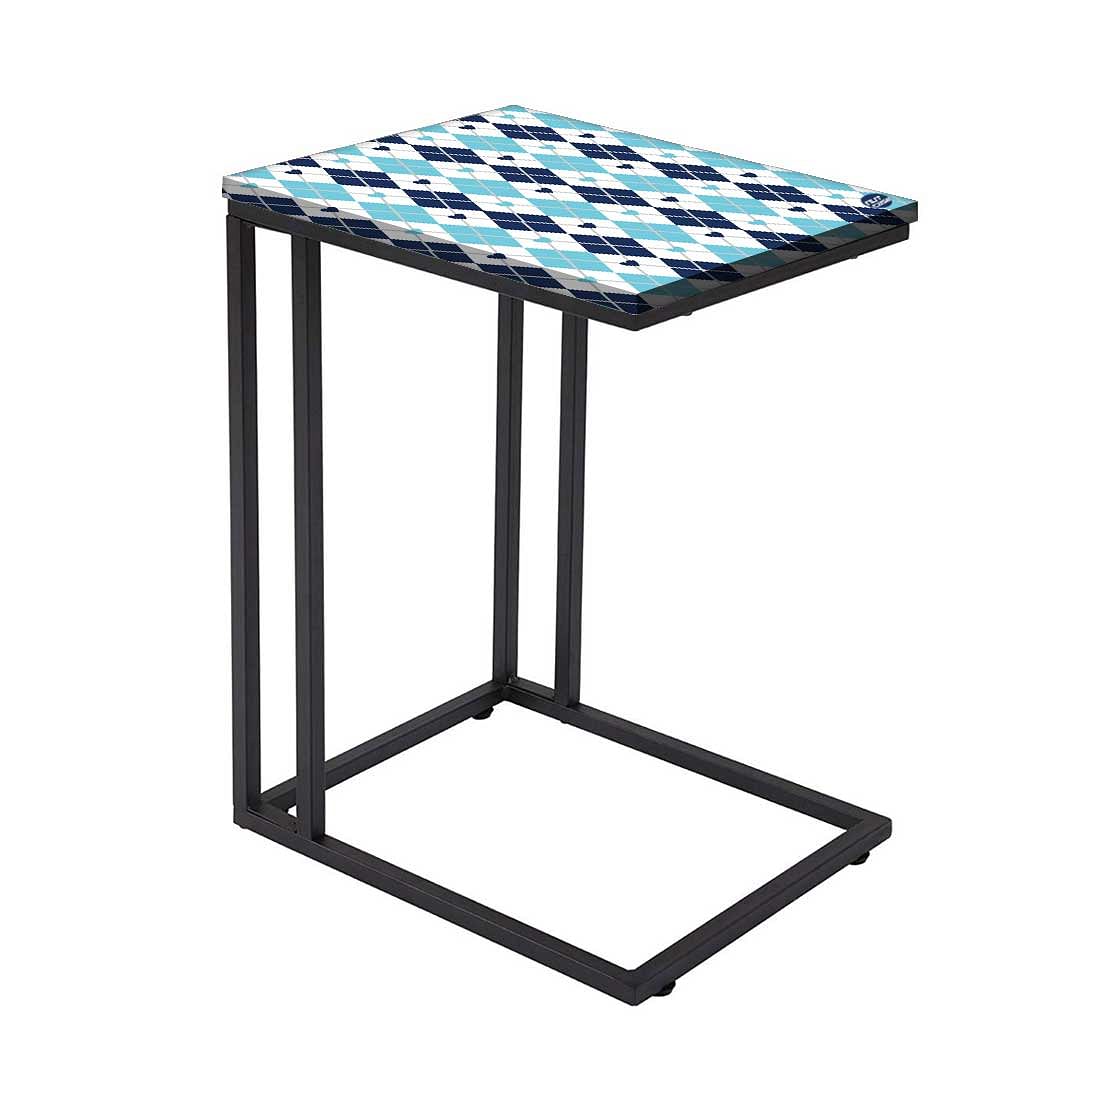 C Shaped Metal Table For Sofa - Blue Plaids Nutcase